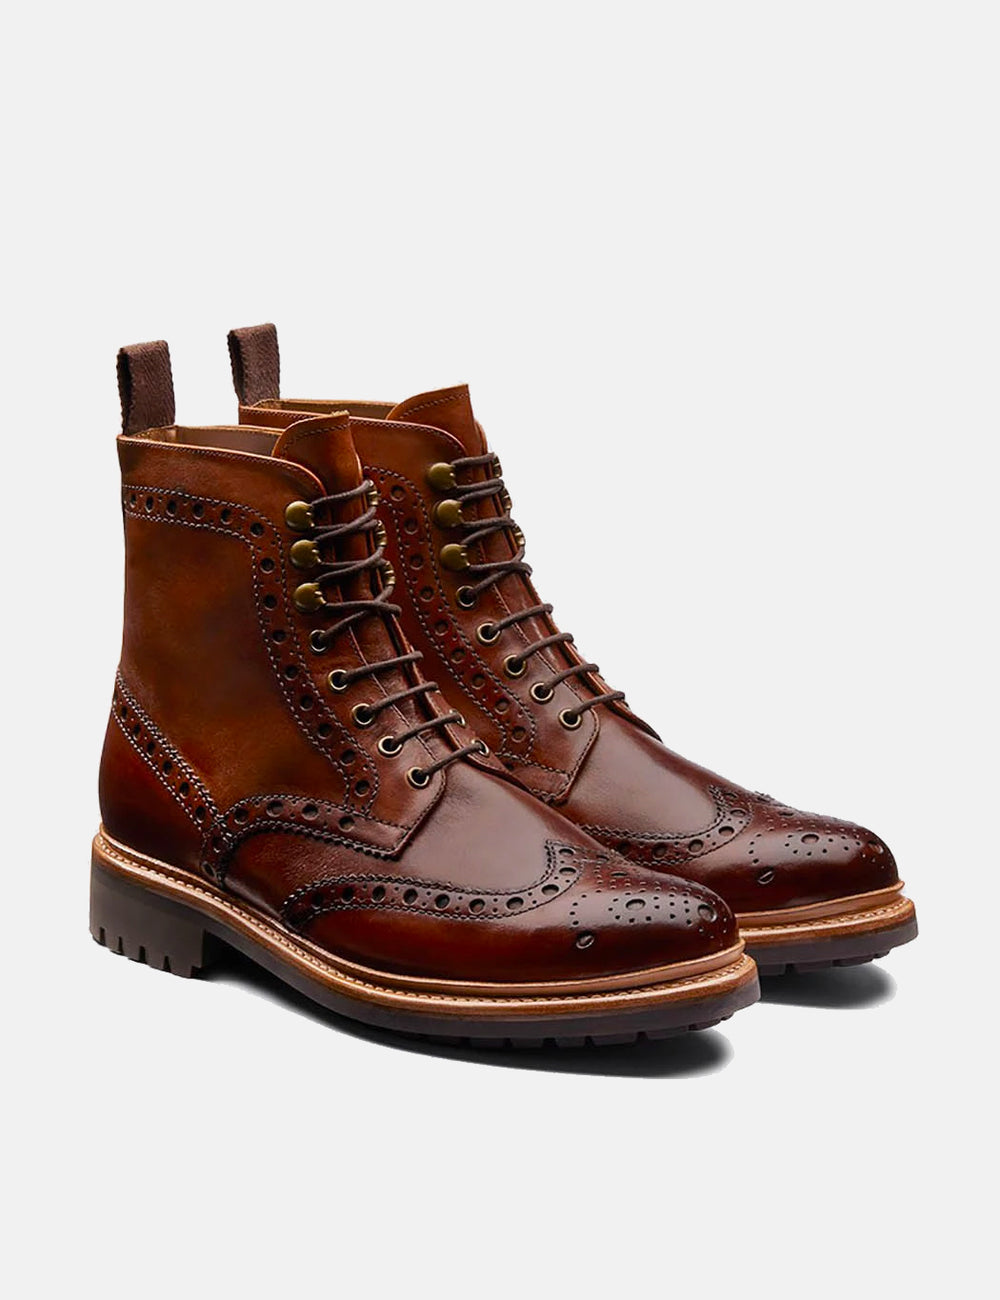 grenson brogue boots sale